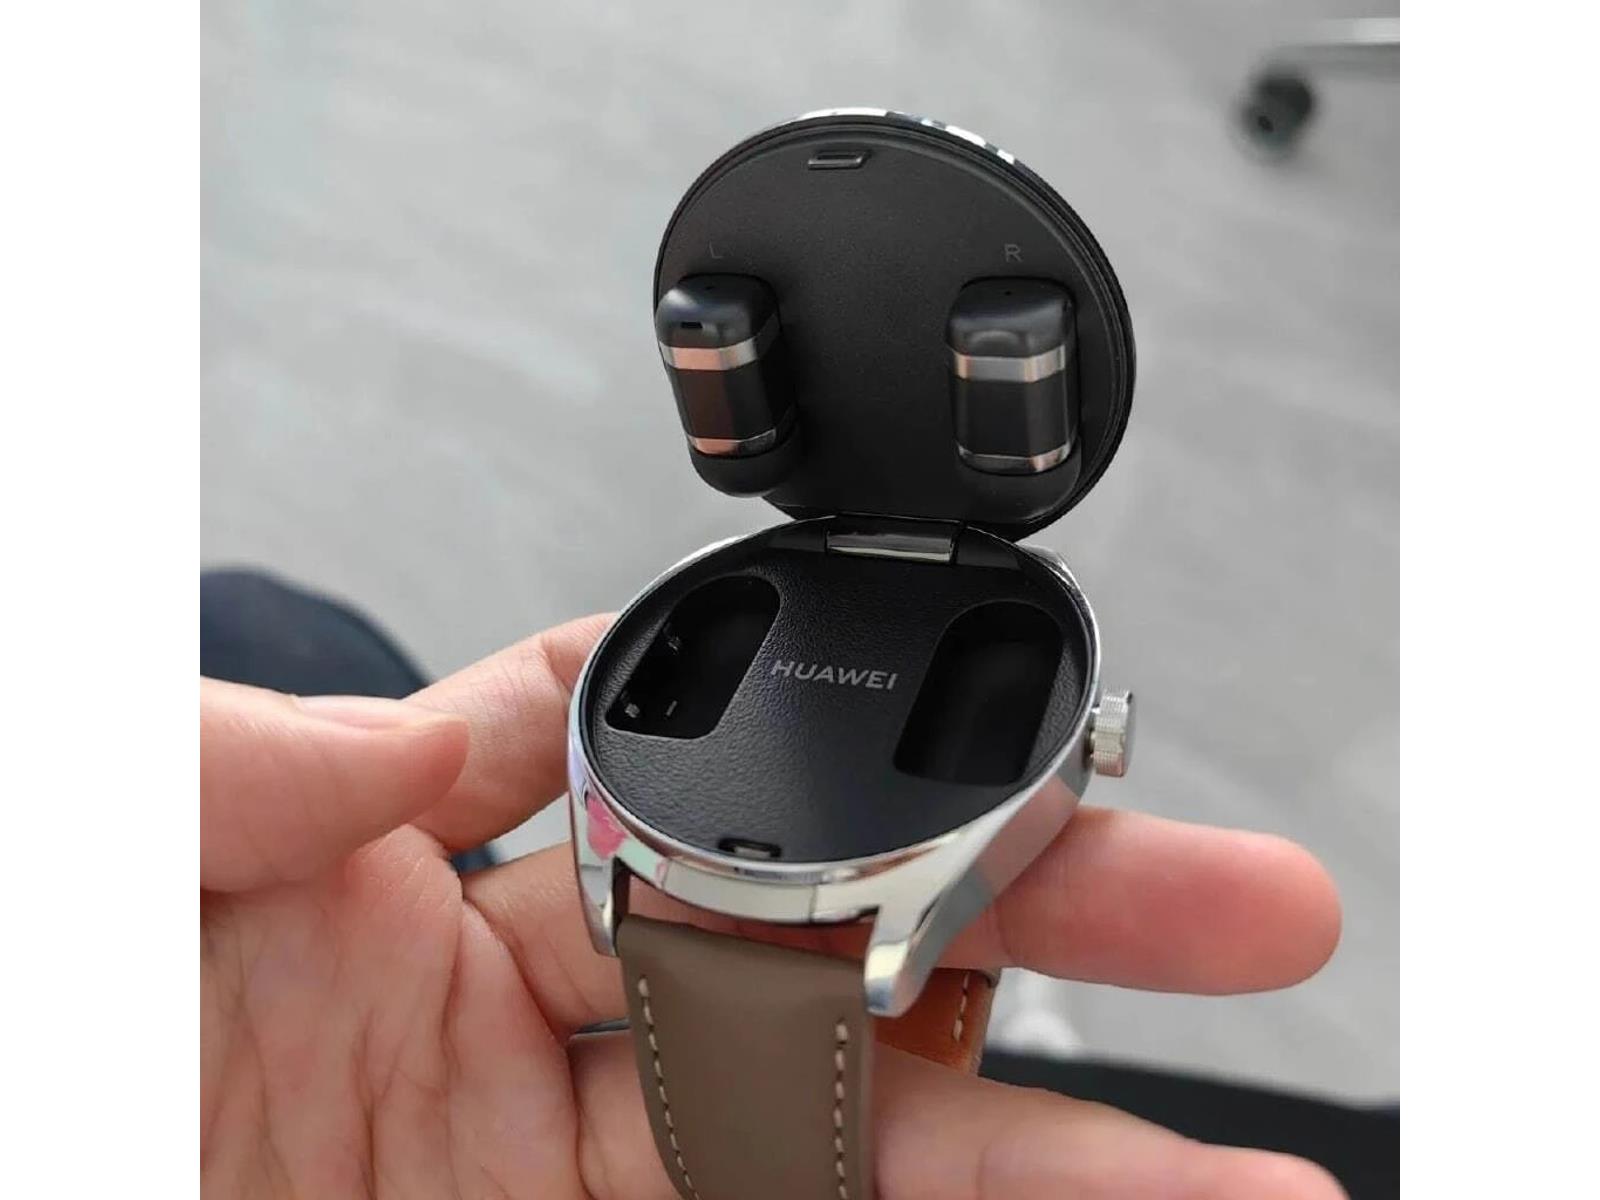 Huawei Watch Buds Smartwatch with in-built Earphones